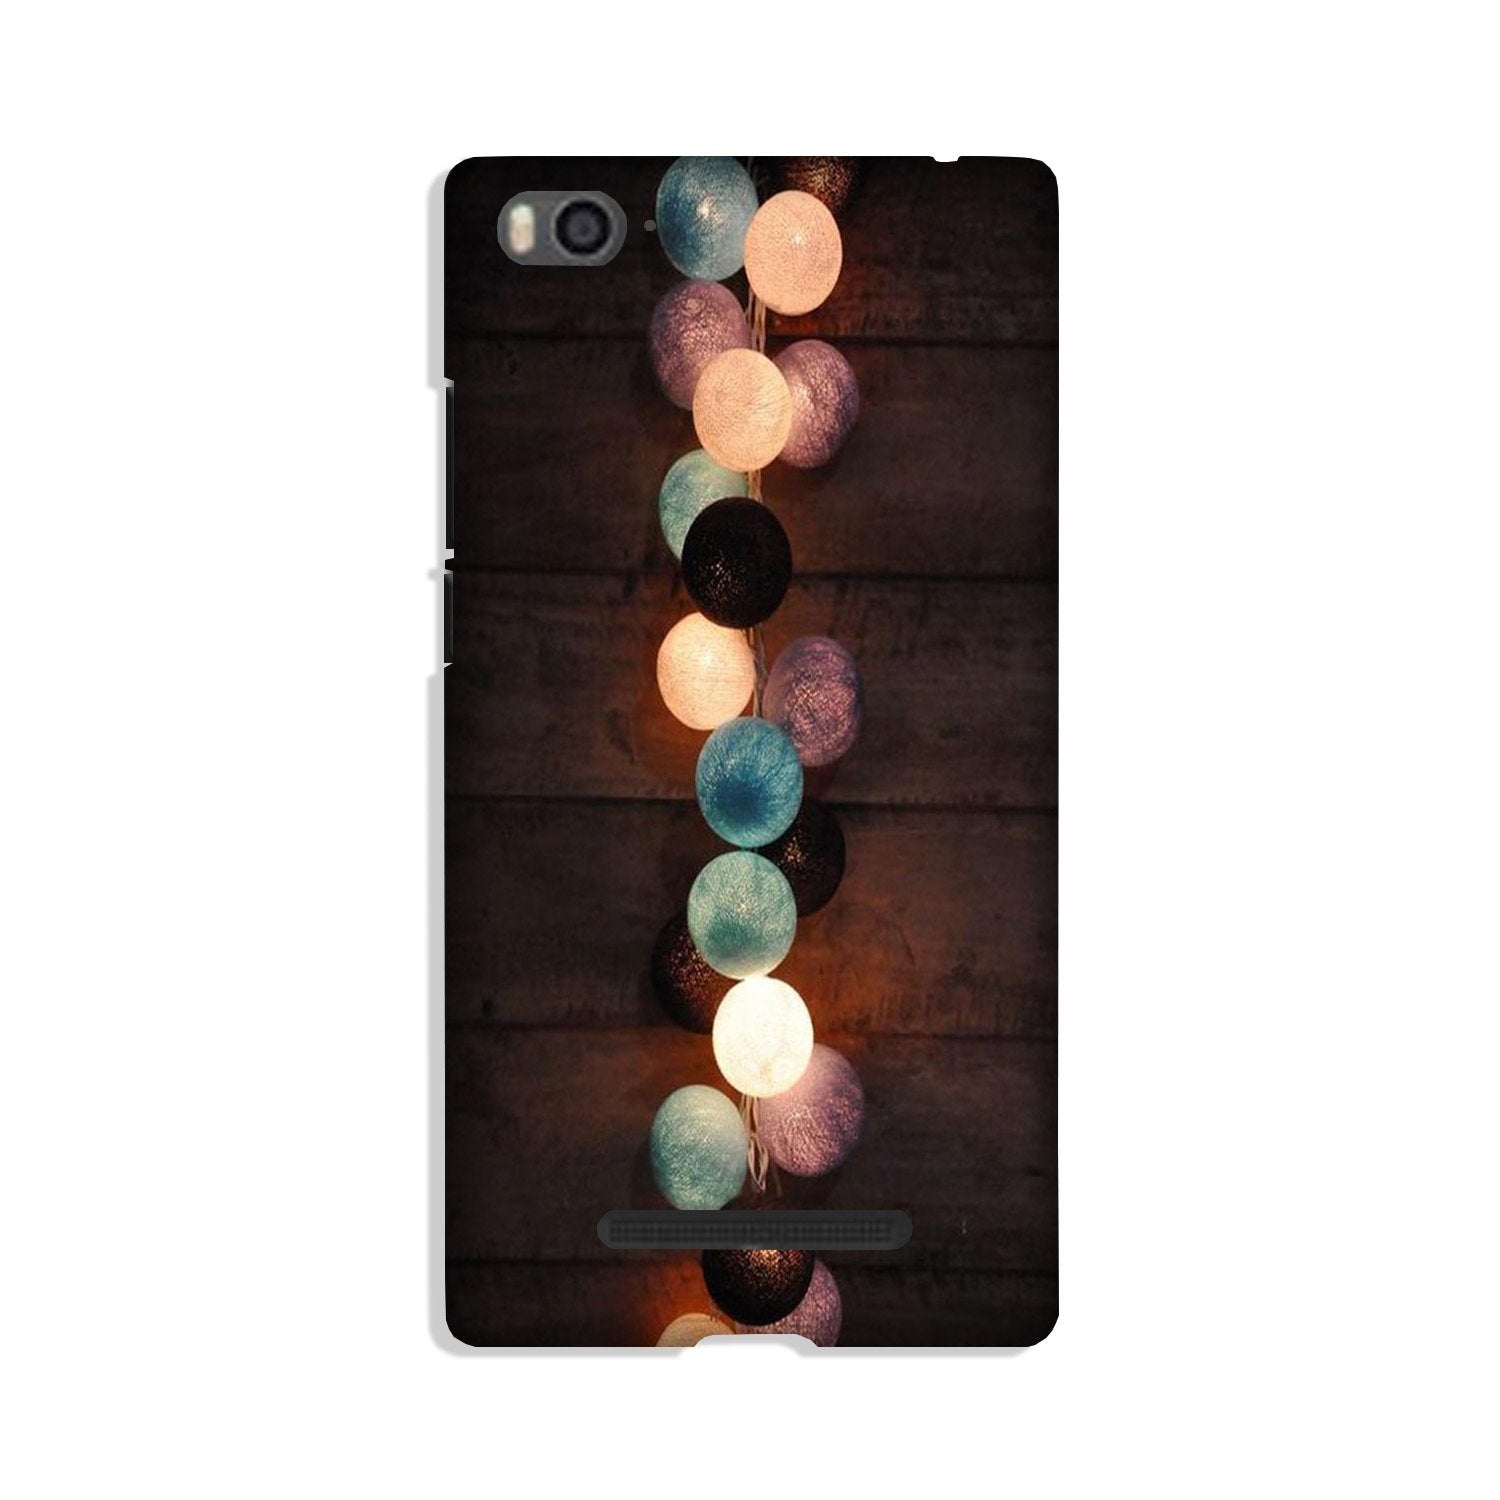 Party Lights Case for Xiaomi Mi 4i (Design No. 209)